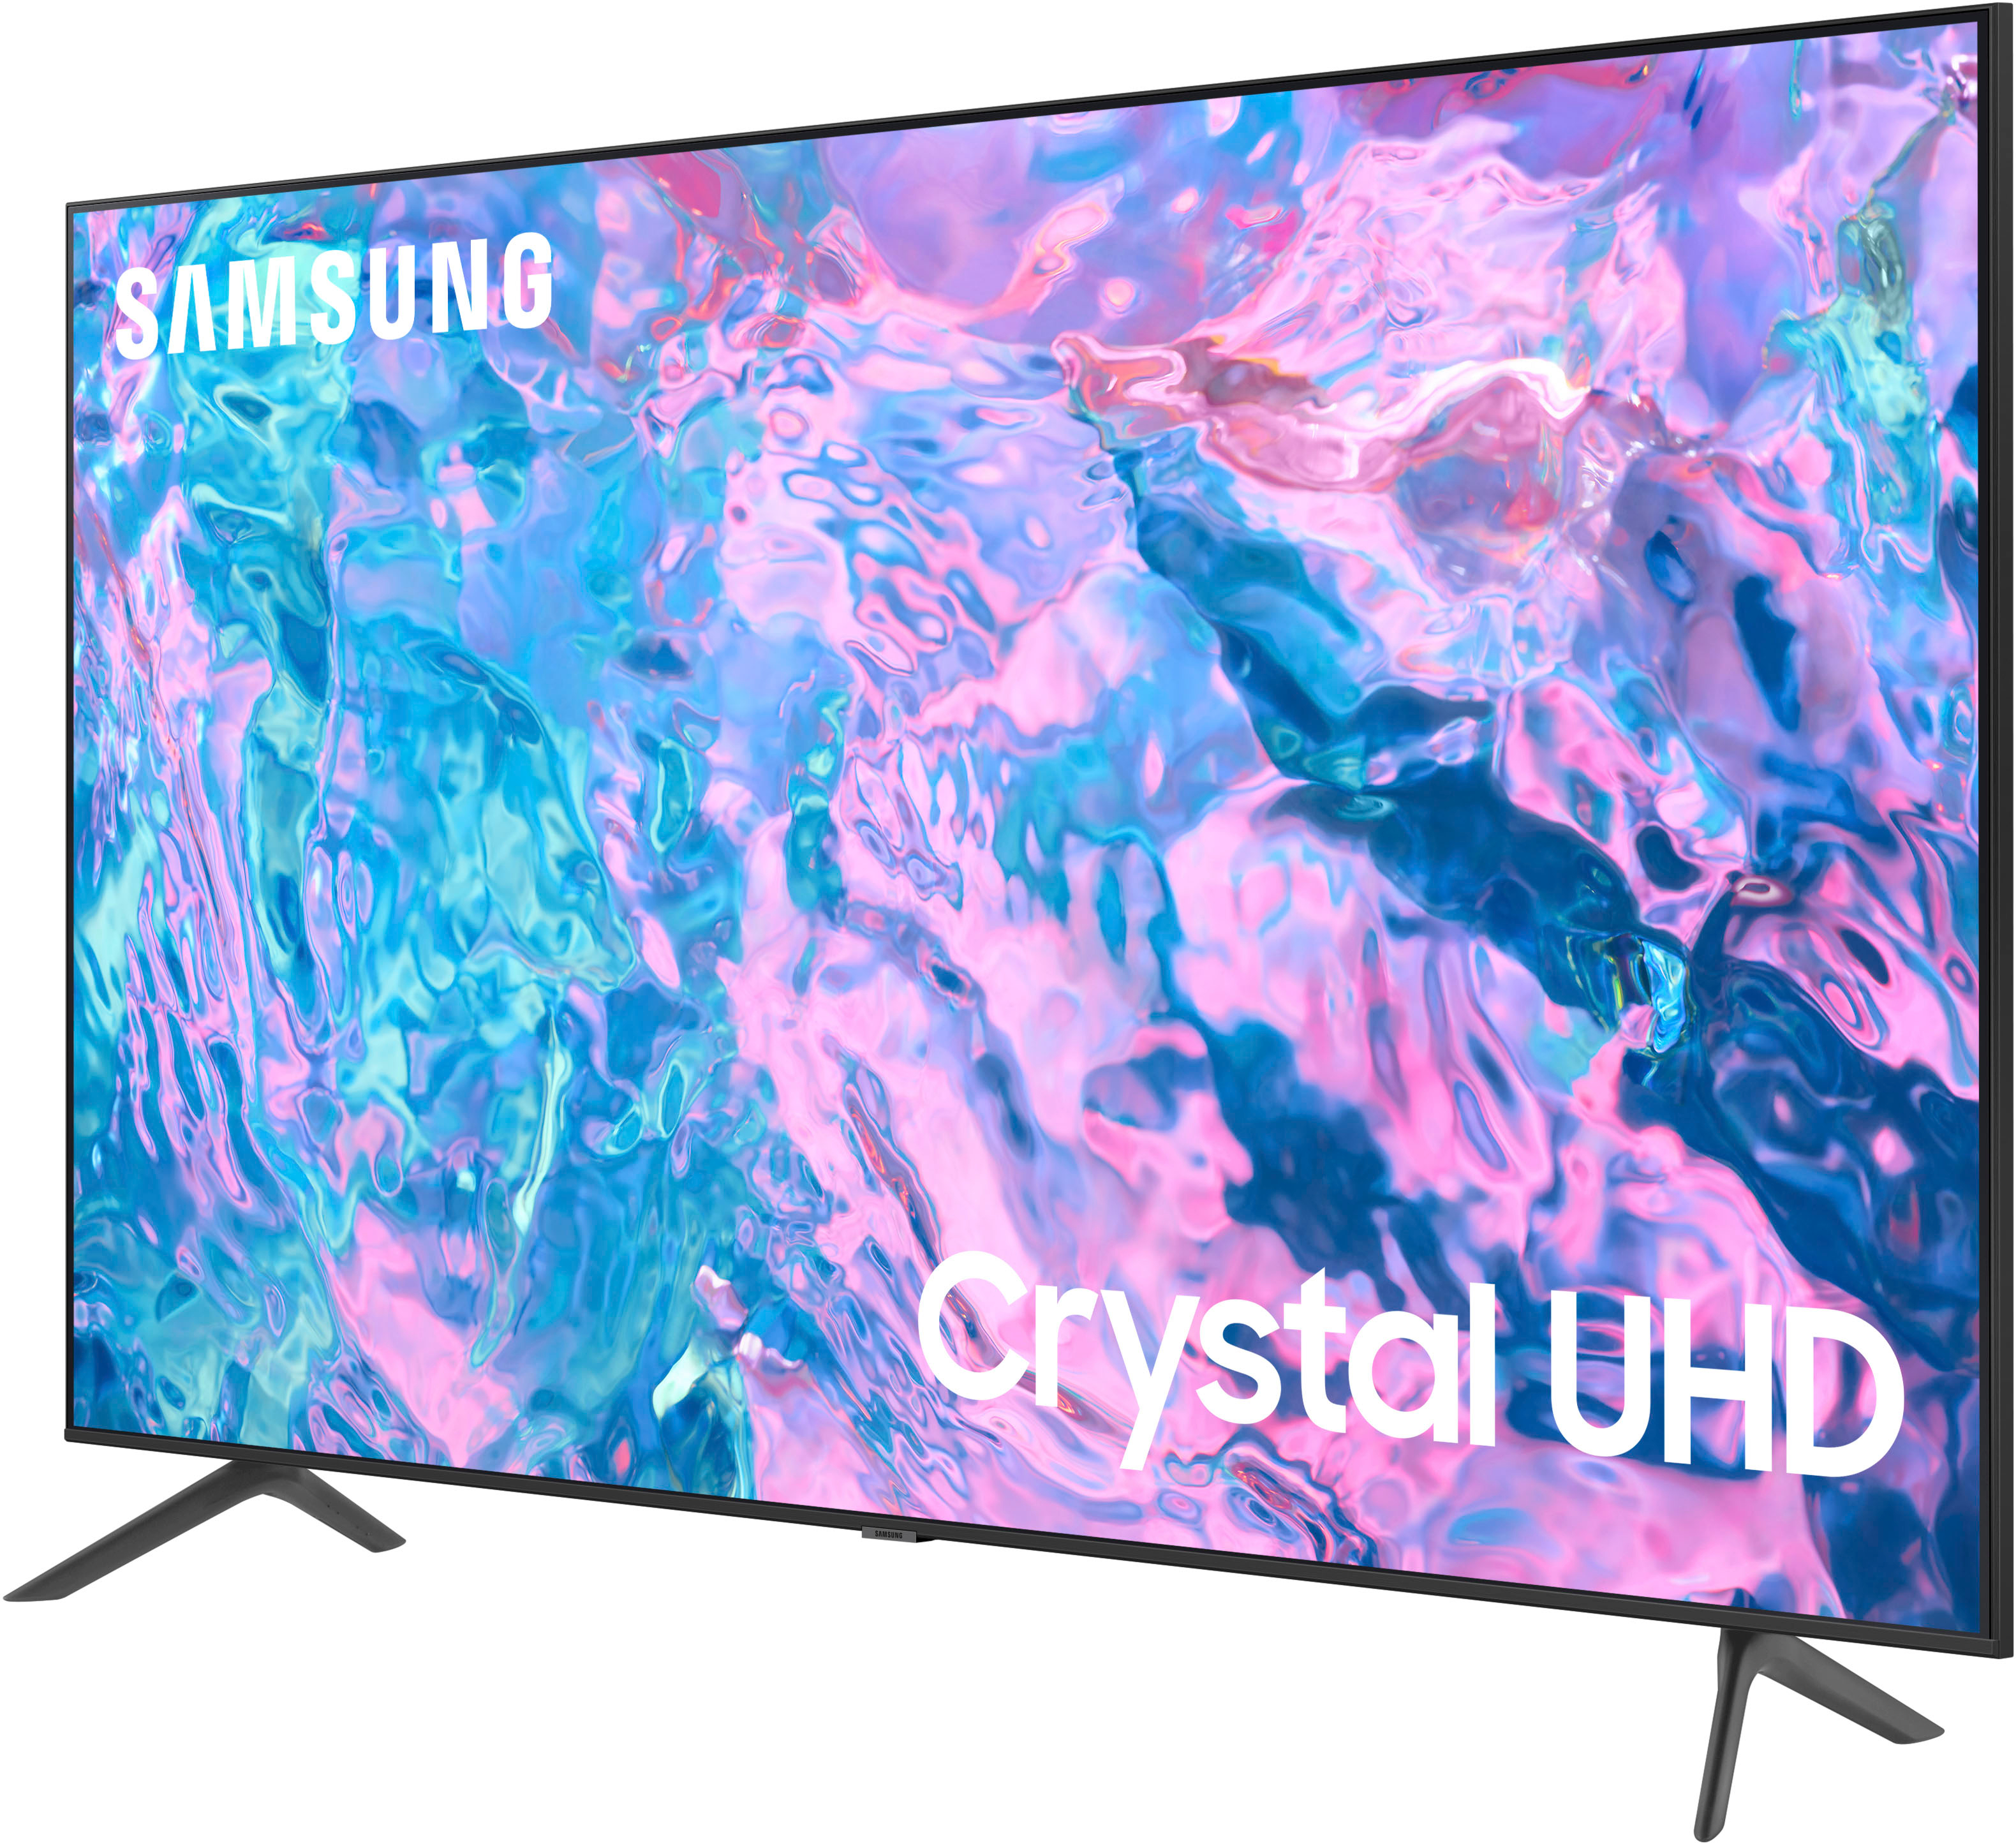 65” Class CU7000 Crystal UHD 4K UHD TV - Best Buy